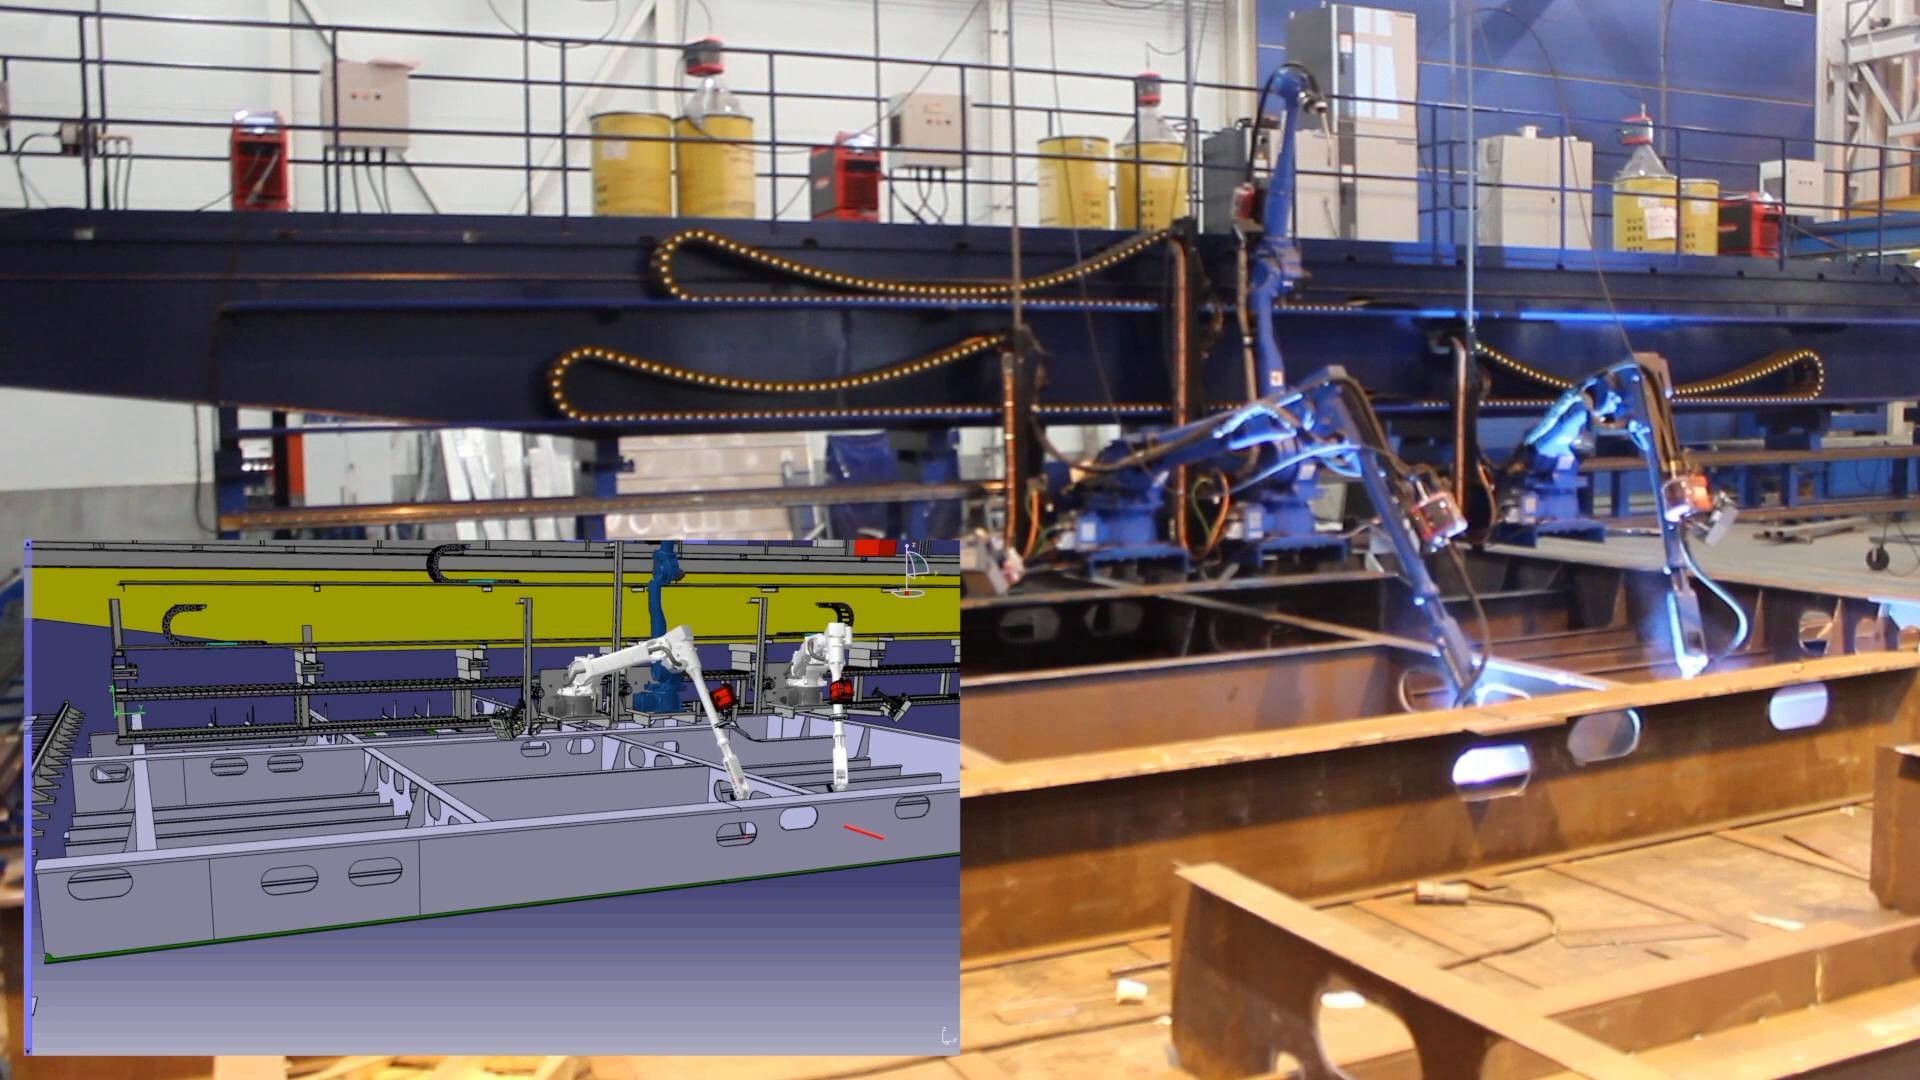 Robotics in Shipyards